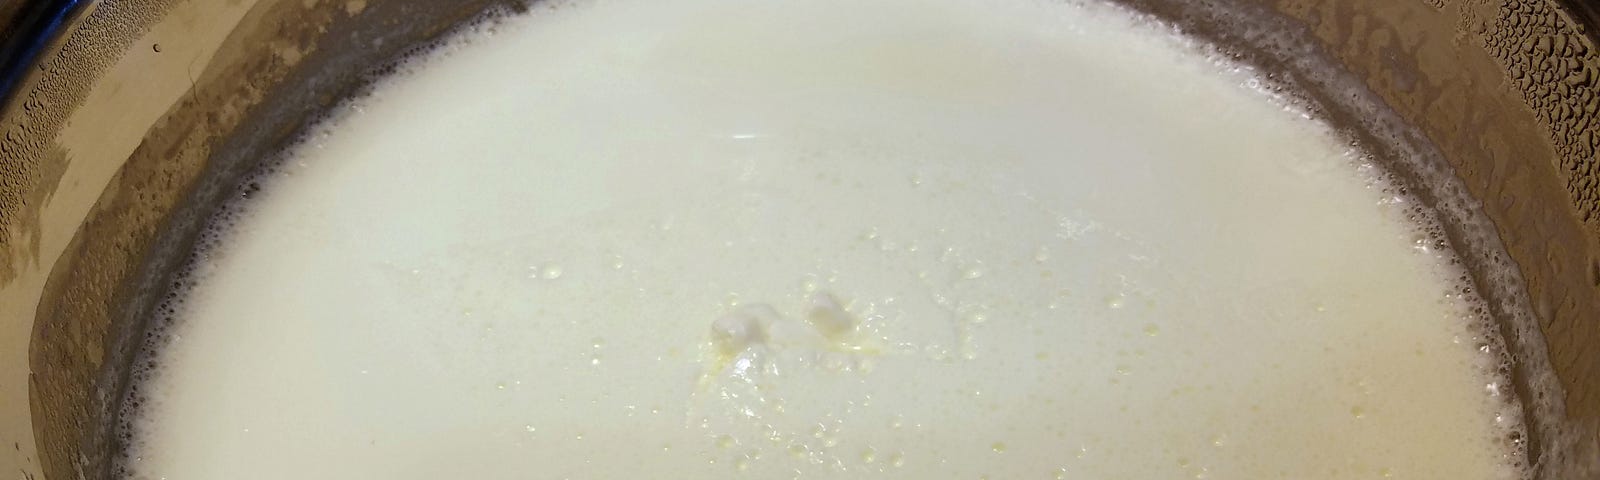 Fresh batch of yogurt in an Instant Pot liner.